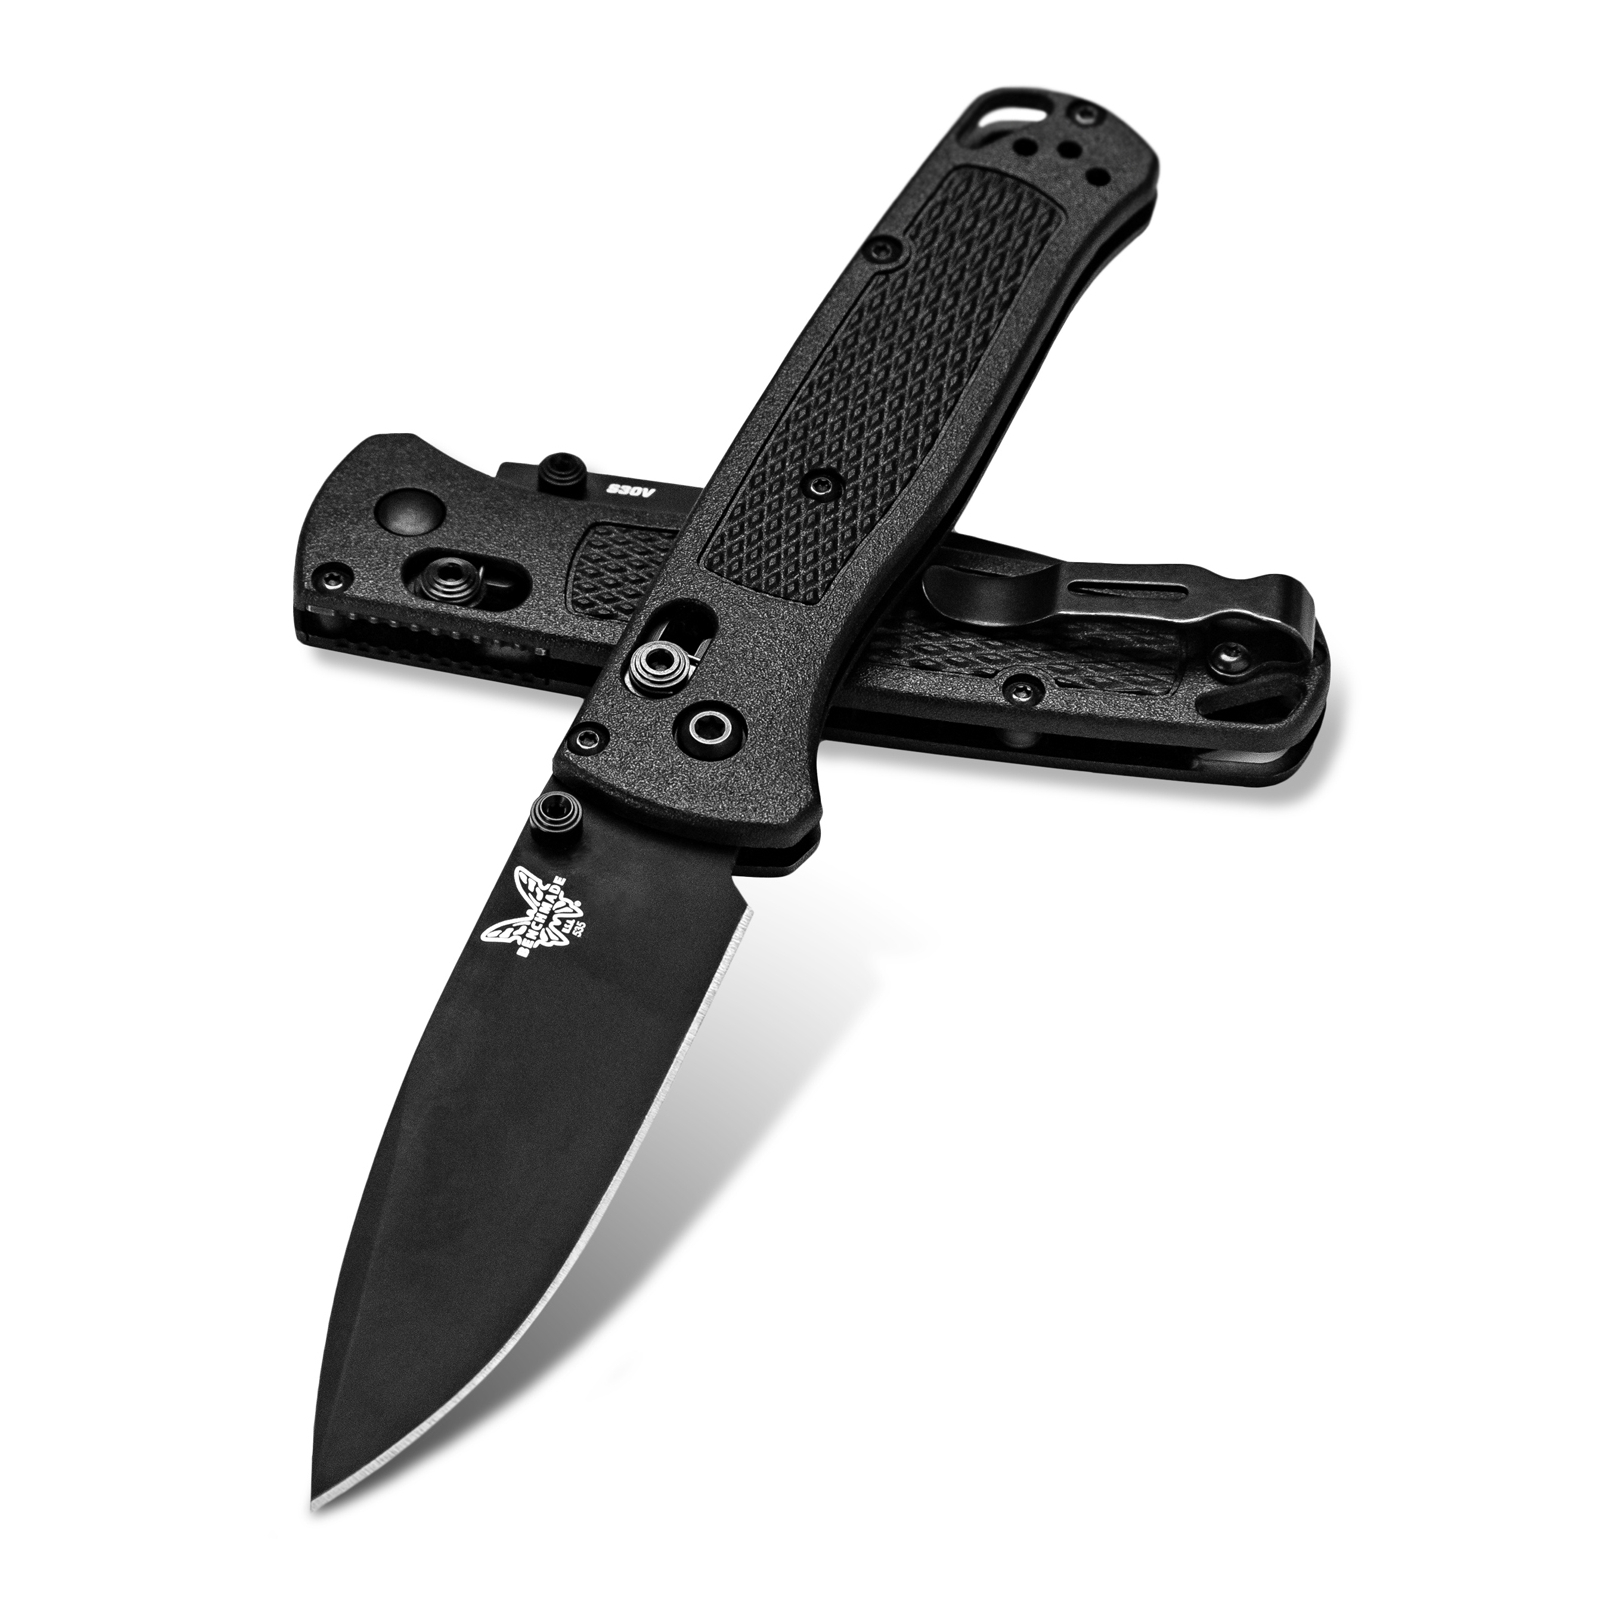 Нож Benchmade Bugout Black Blade, Black CF-Elite Handle (535BK-2) изображение 3